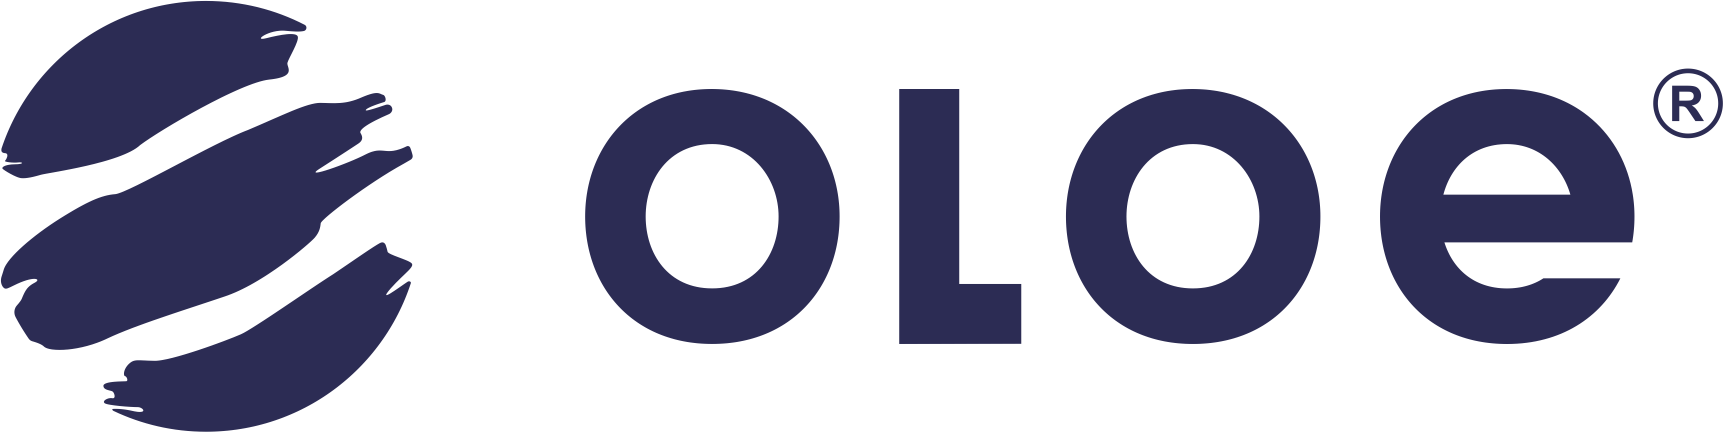 navigation-logo